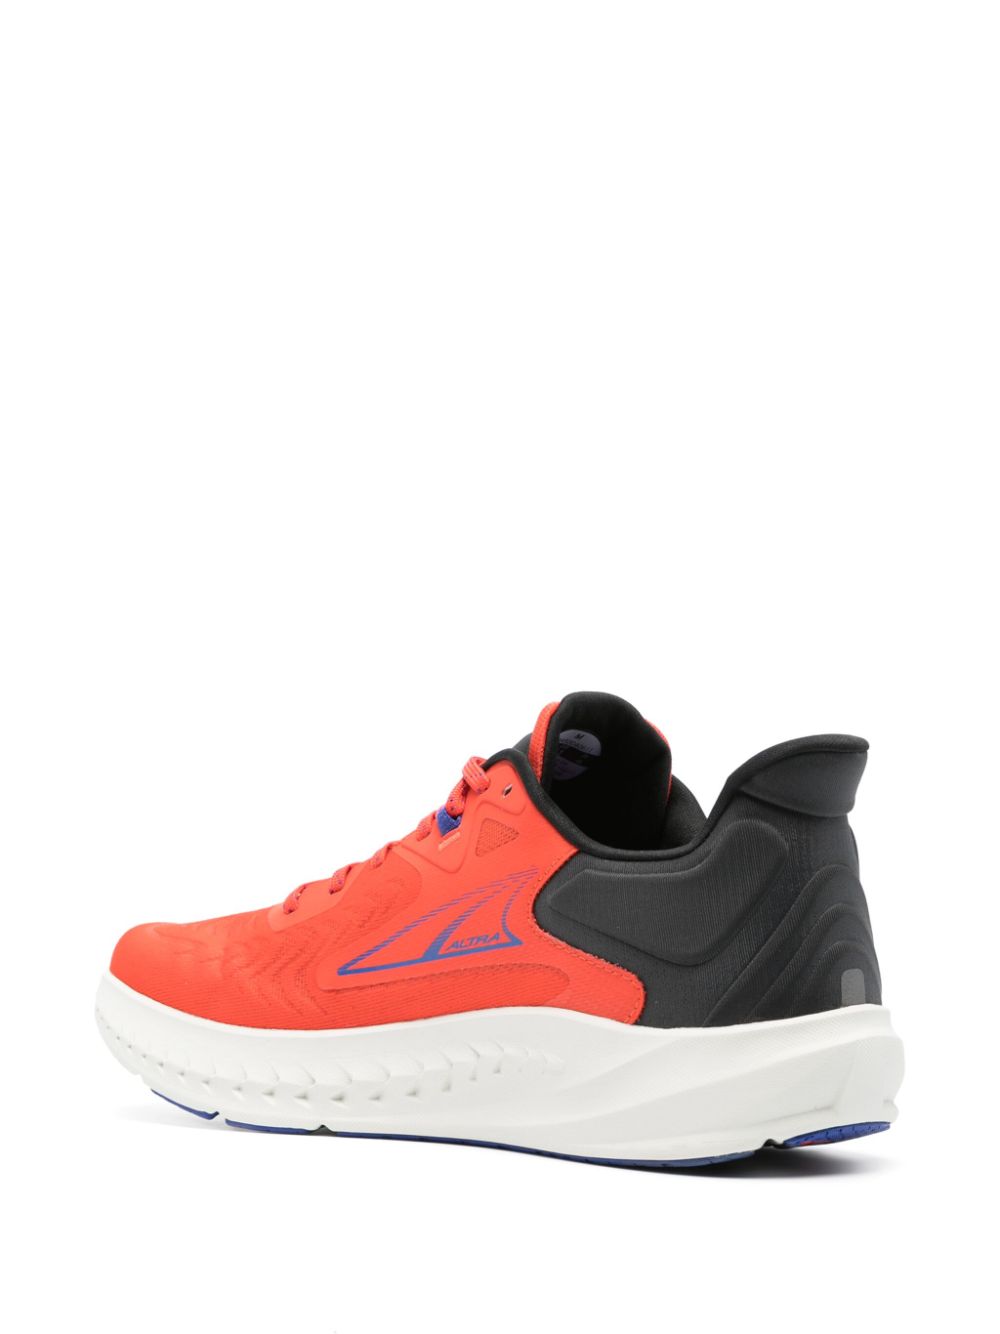 Blak/blue/orange Torin 7 sneakers